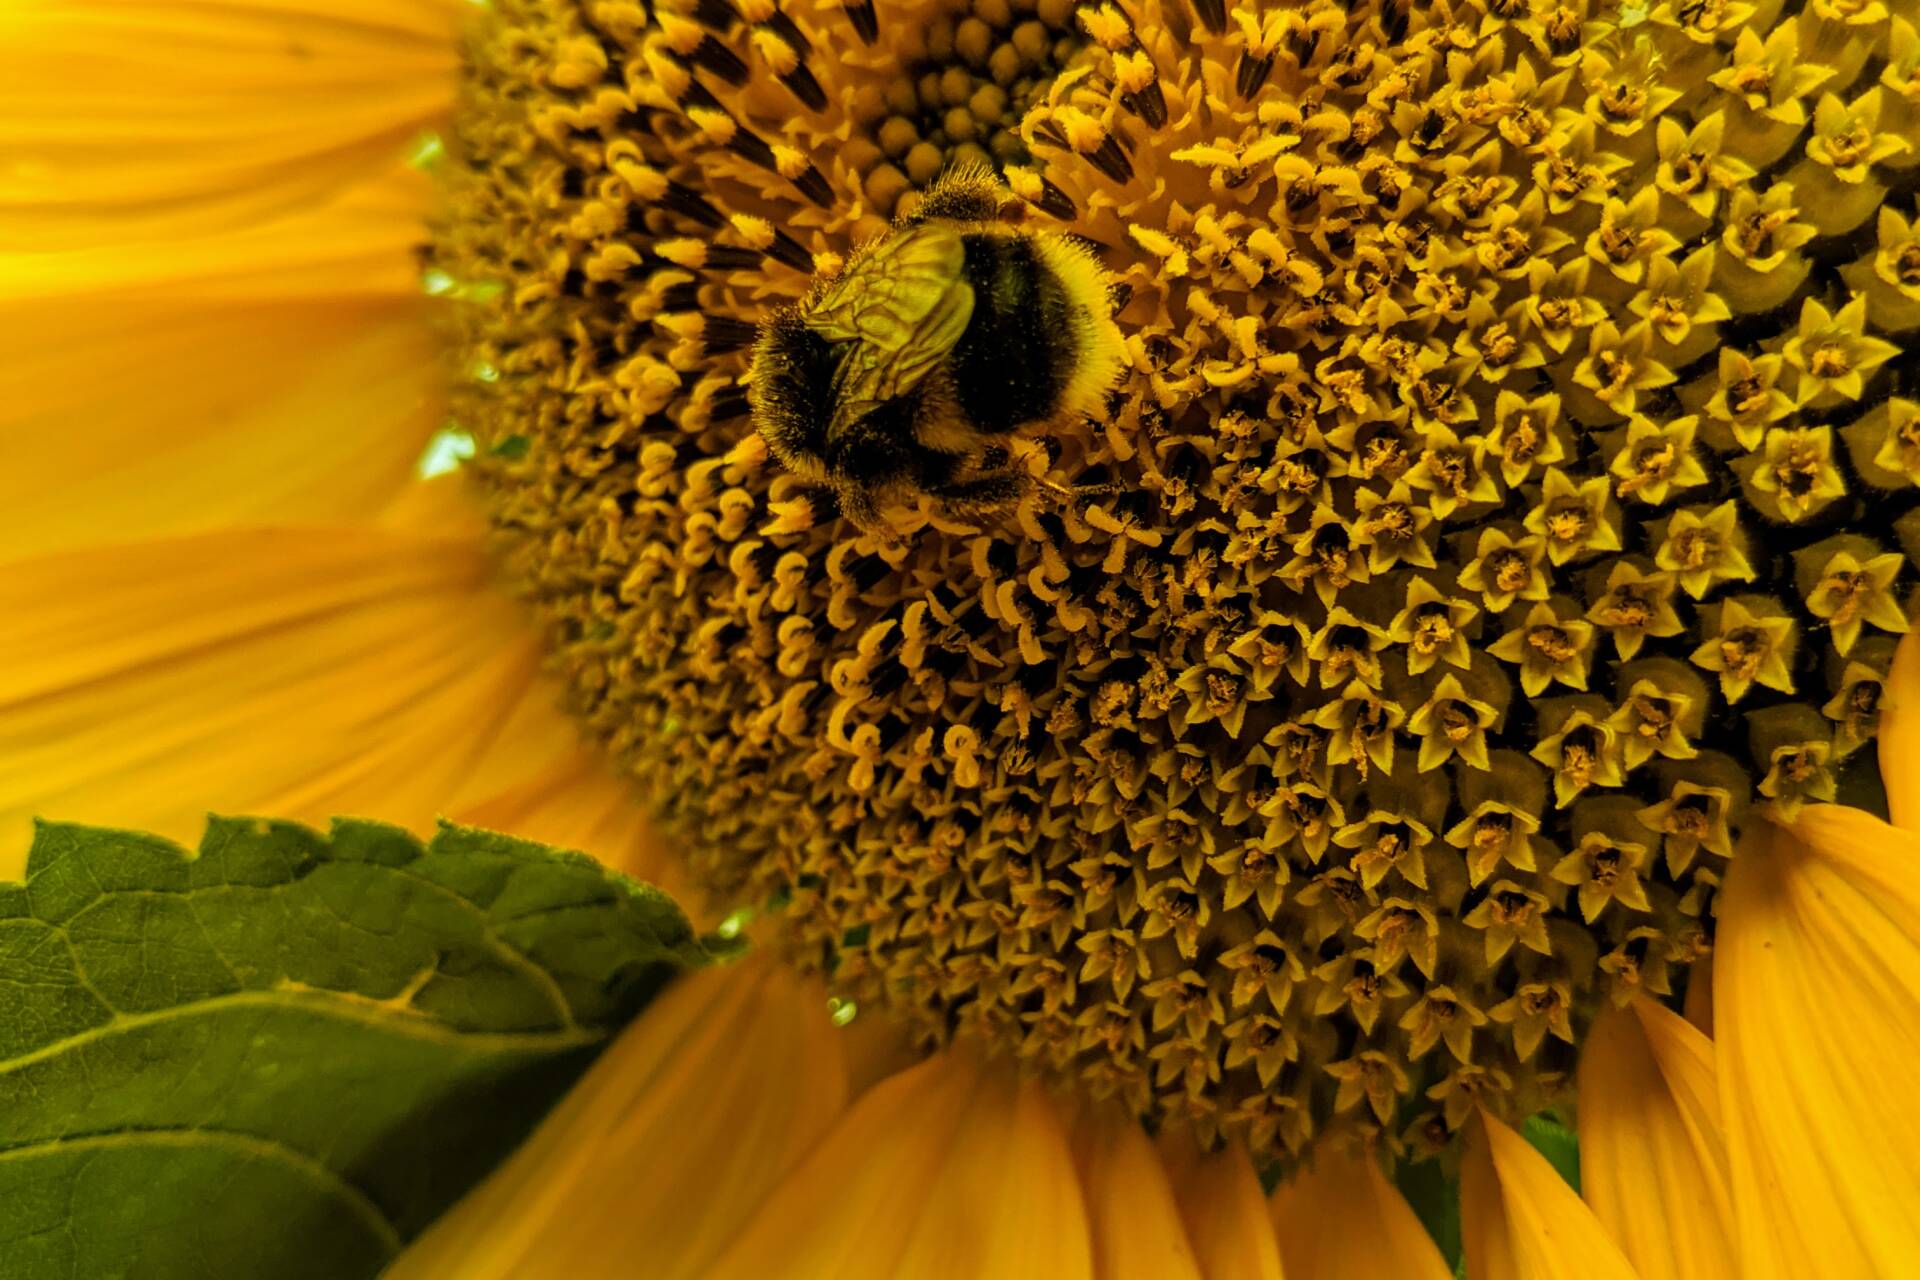 A bumblebee on a sunflower